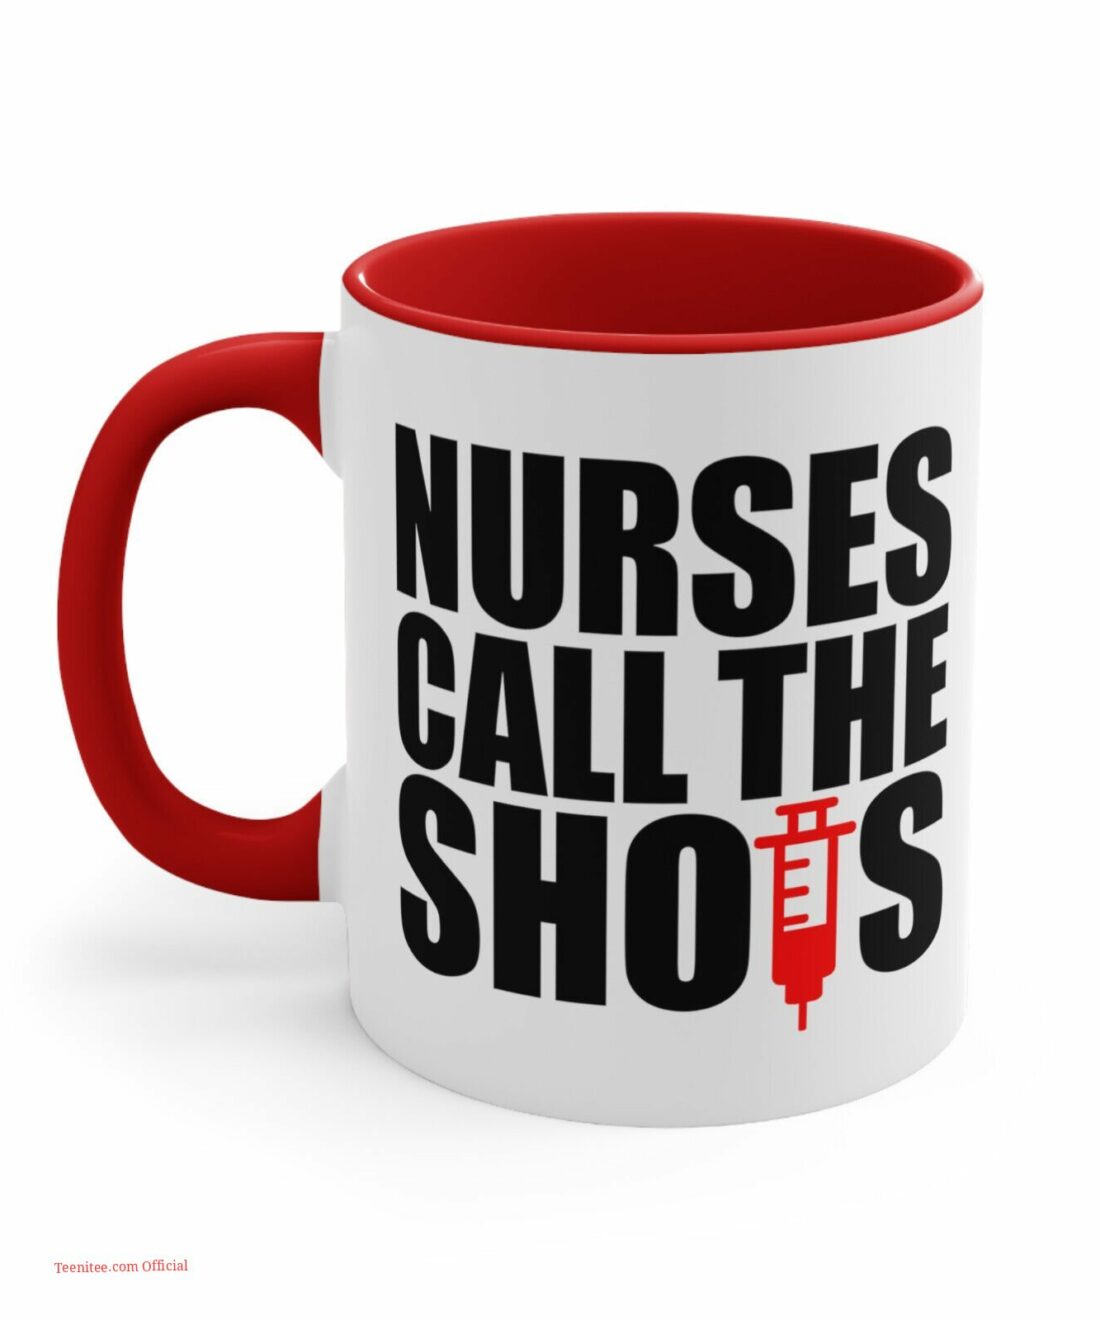 Nurse call the shot| cute gift mug for mom or daughter - 15 oz